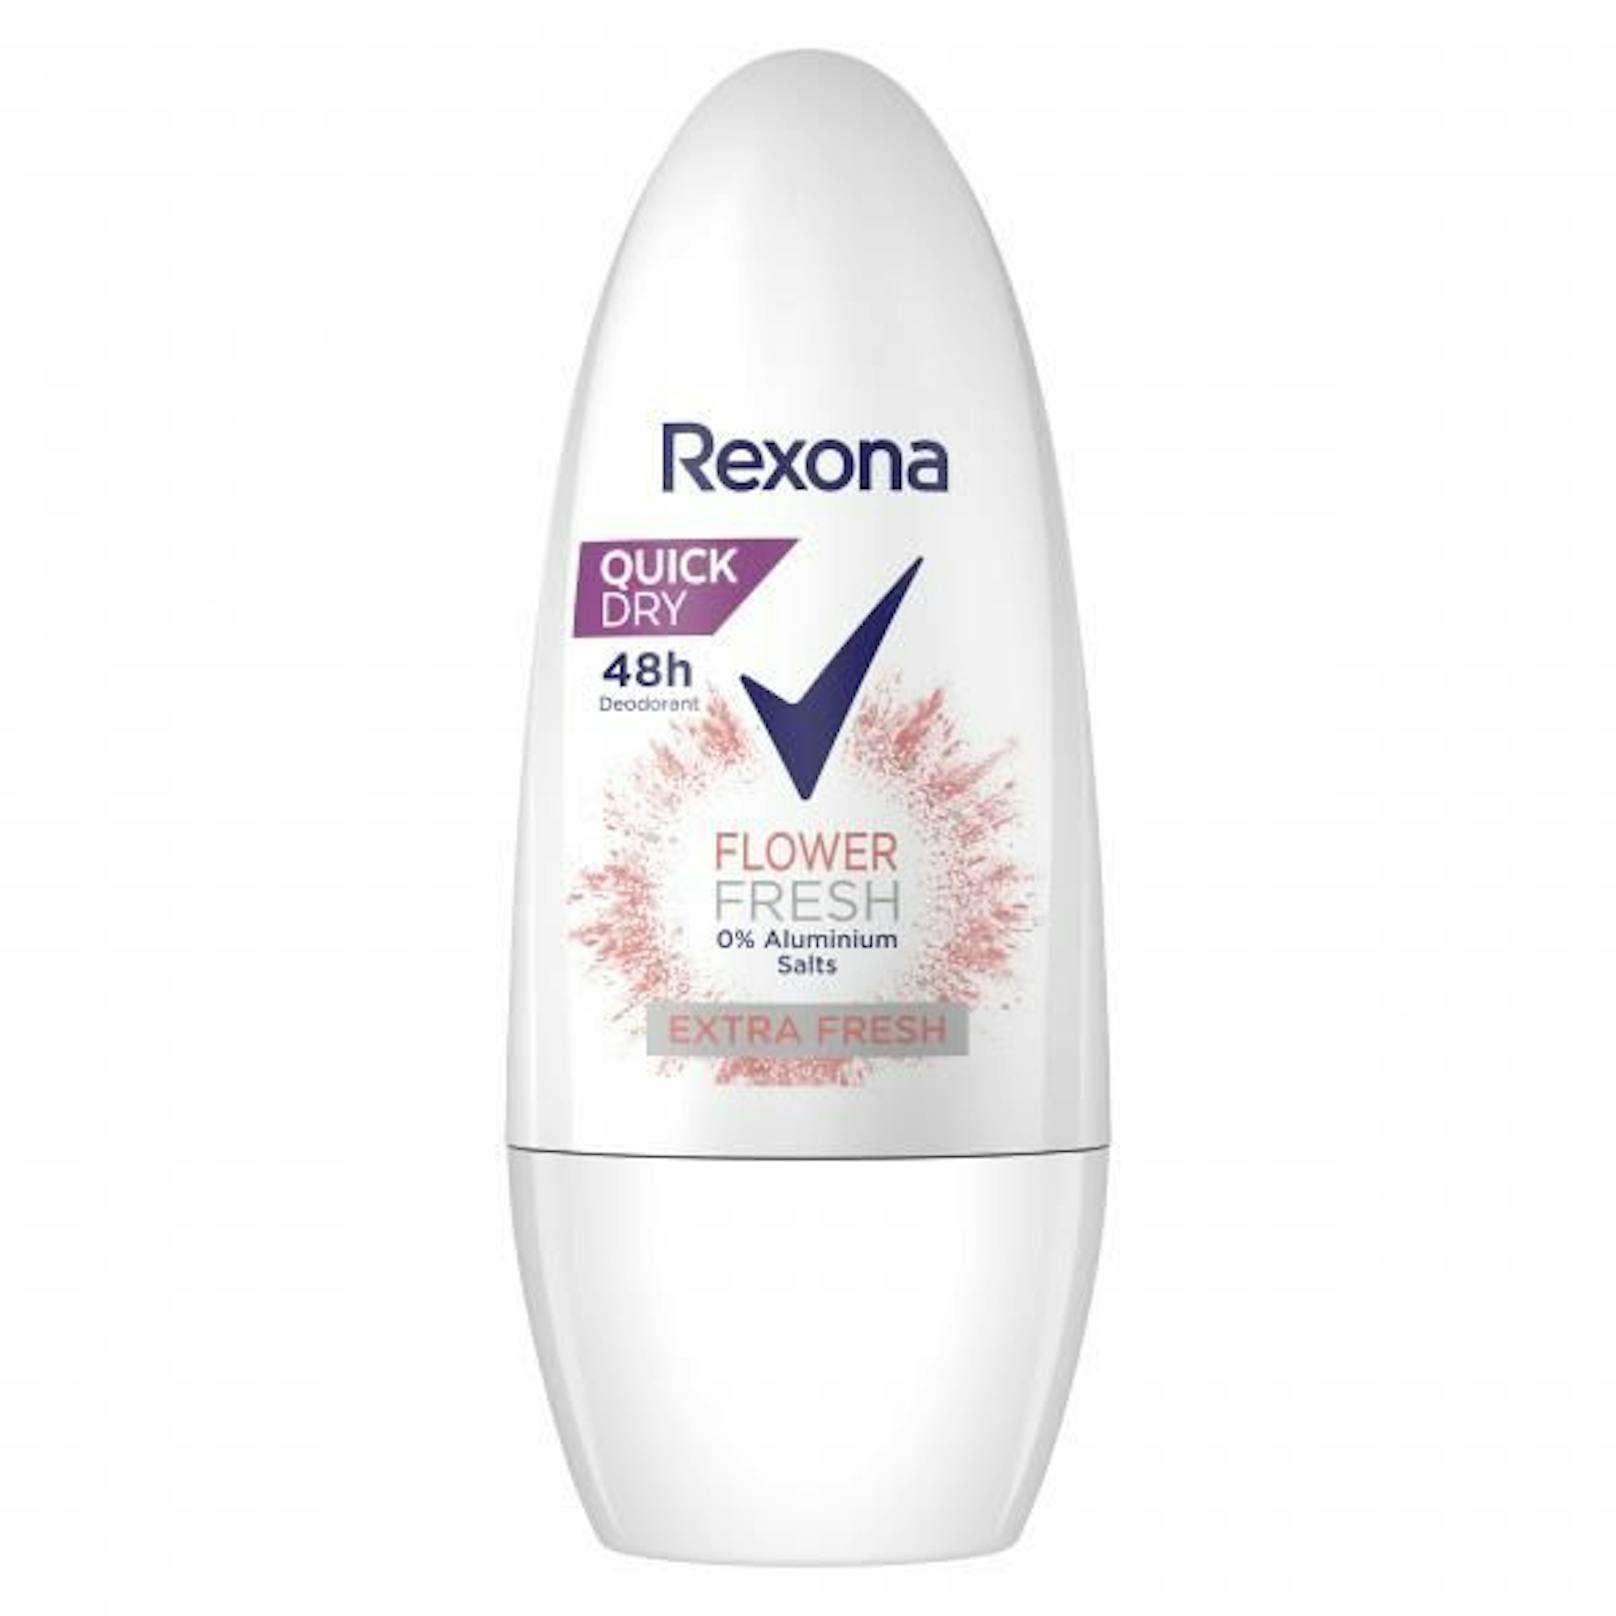 "Flower Fresh Quick Dry Extra Fresh 48h Deodorant" von Rexona